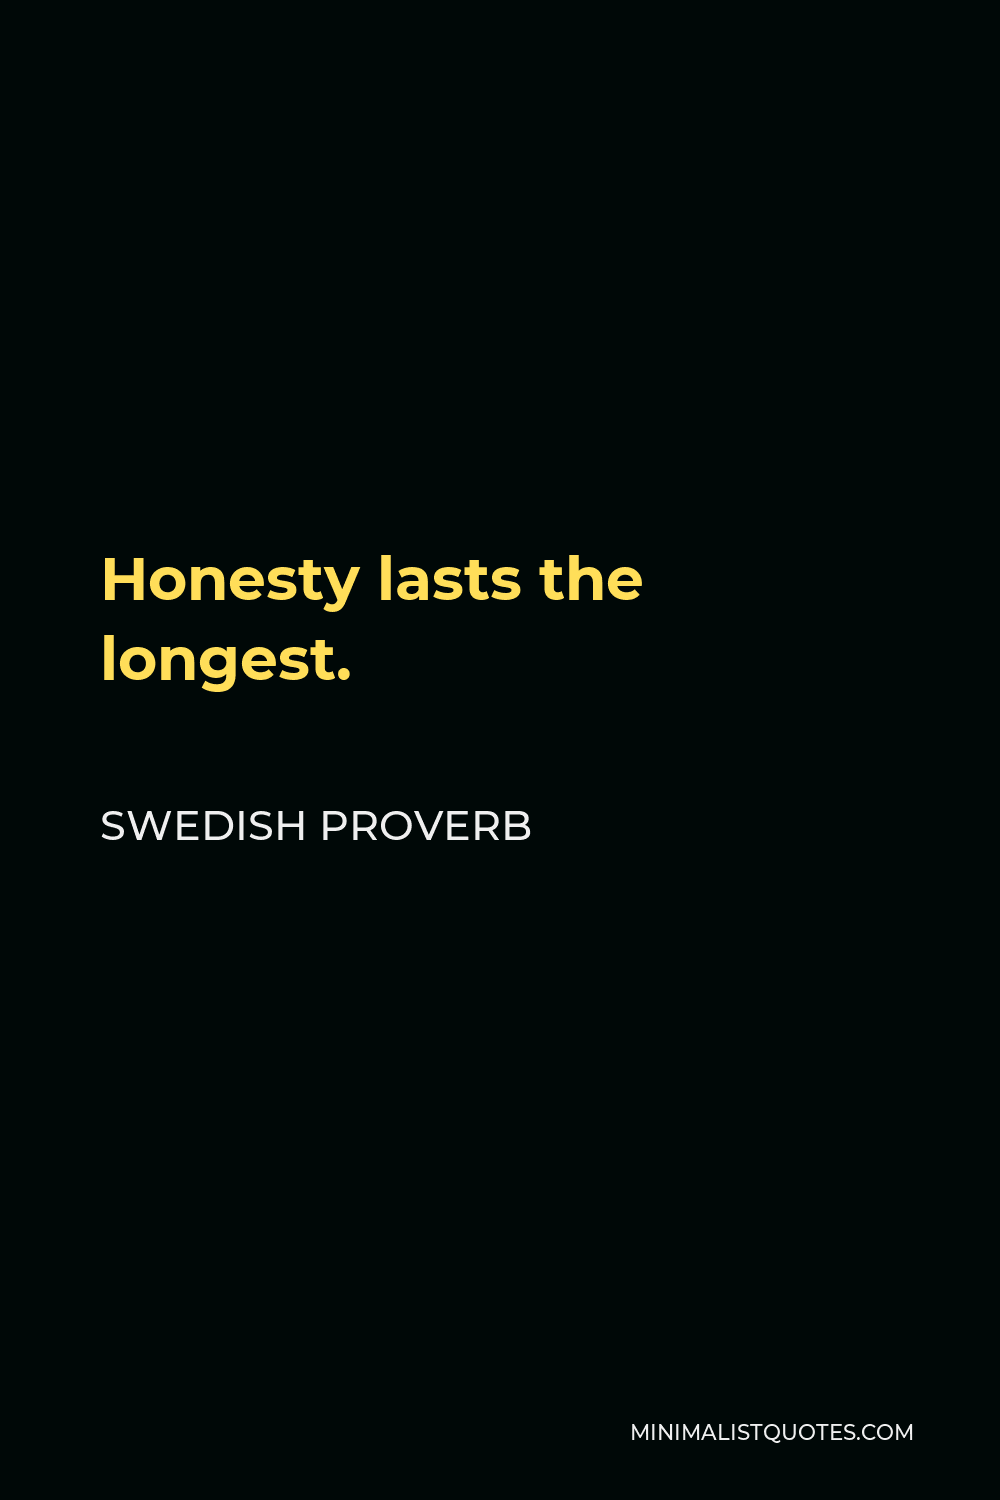 Swedish Proverb Quote - Honesty lasts the longest.